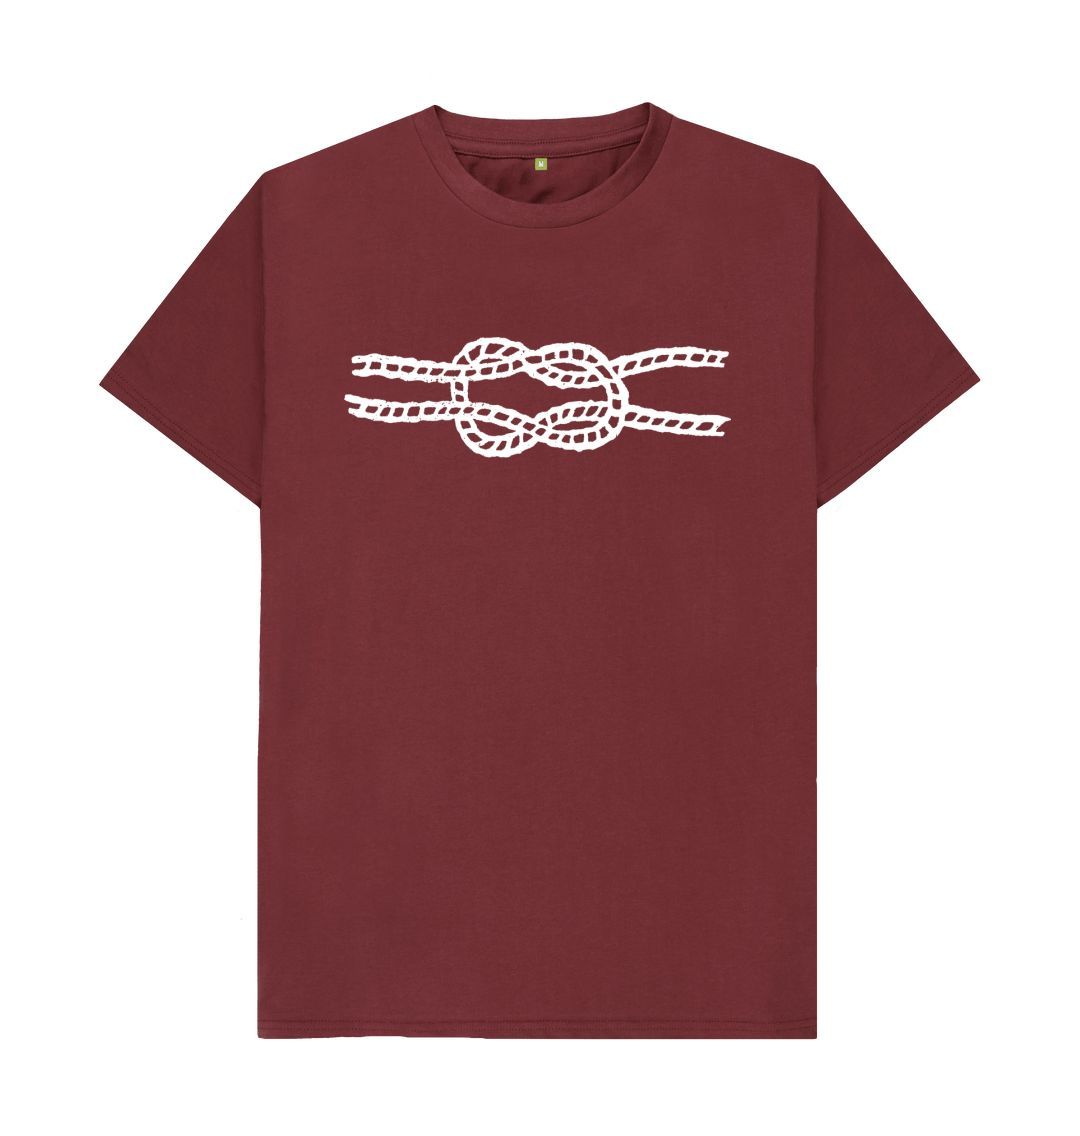 Red Wine P1AN Knot Mens T-shirt